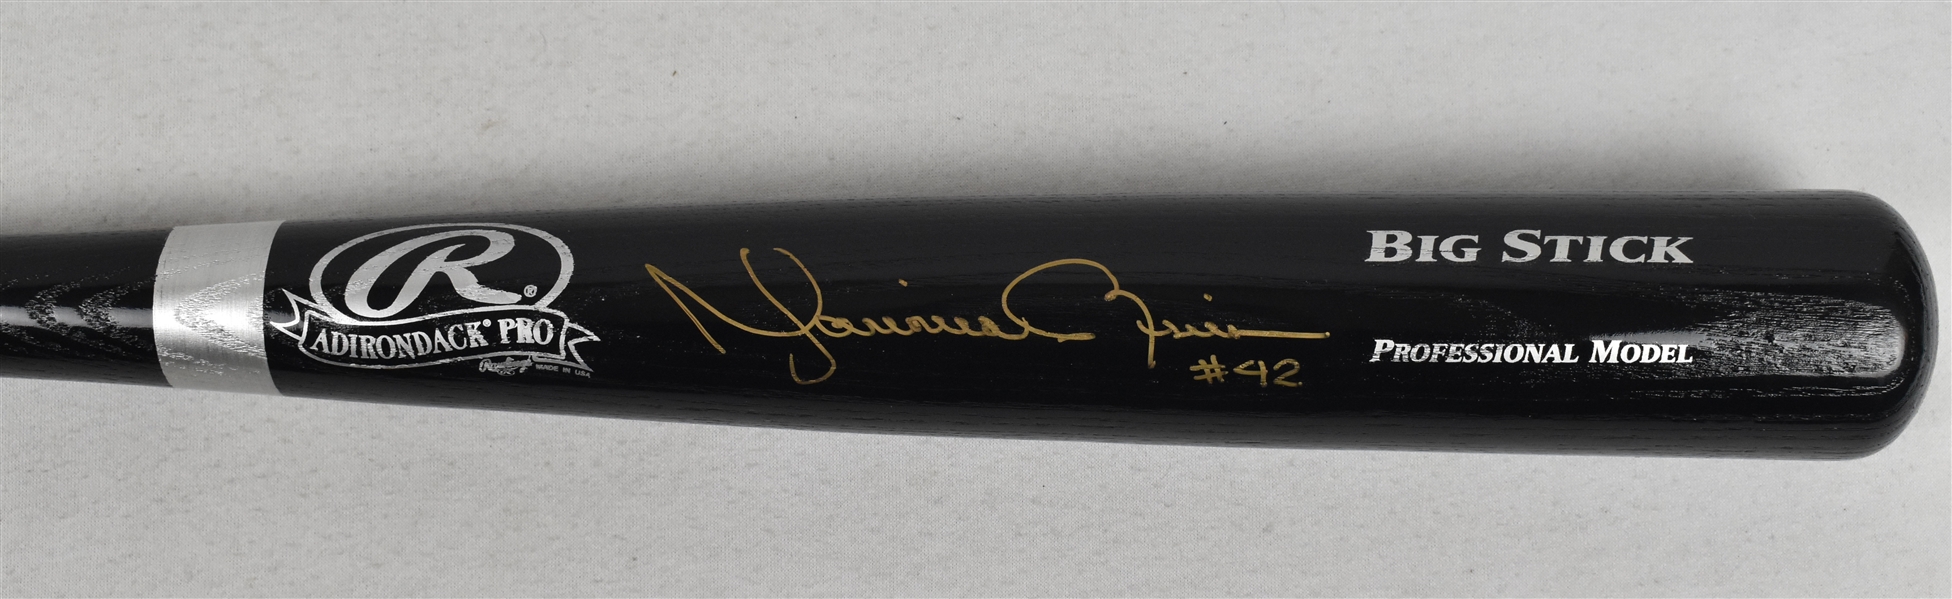 Mariano Rivera Autographed Bat